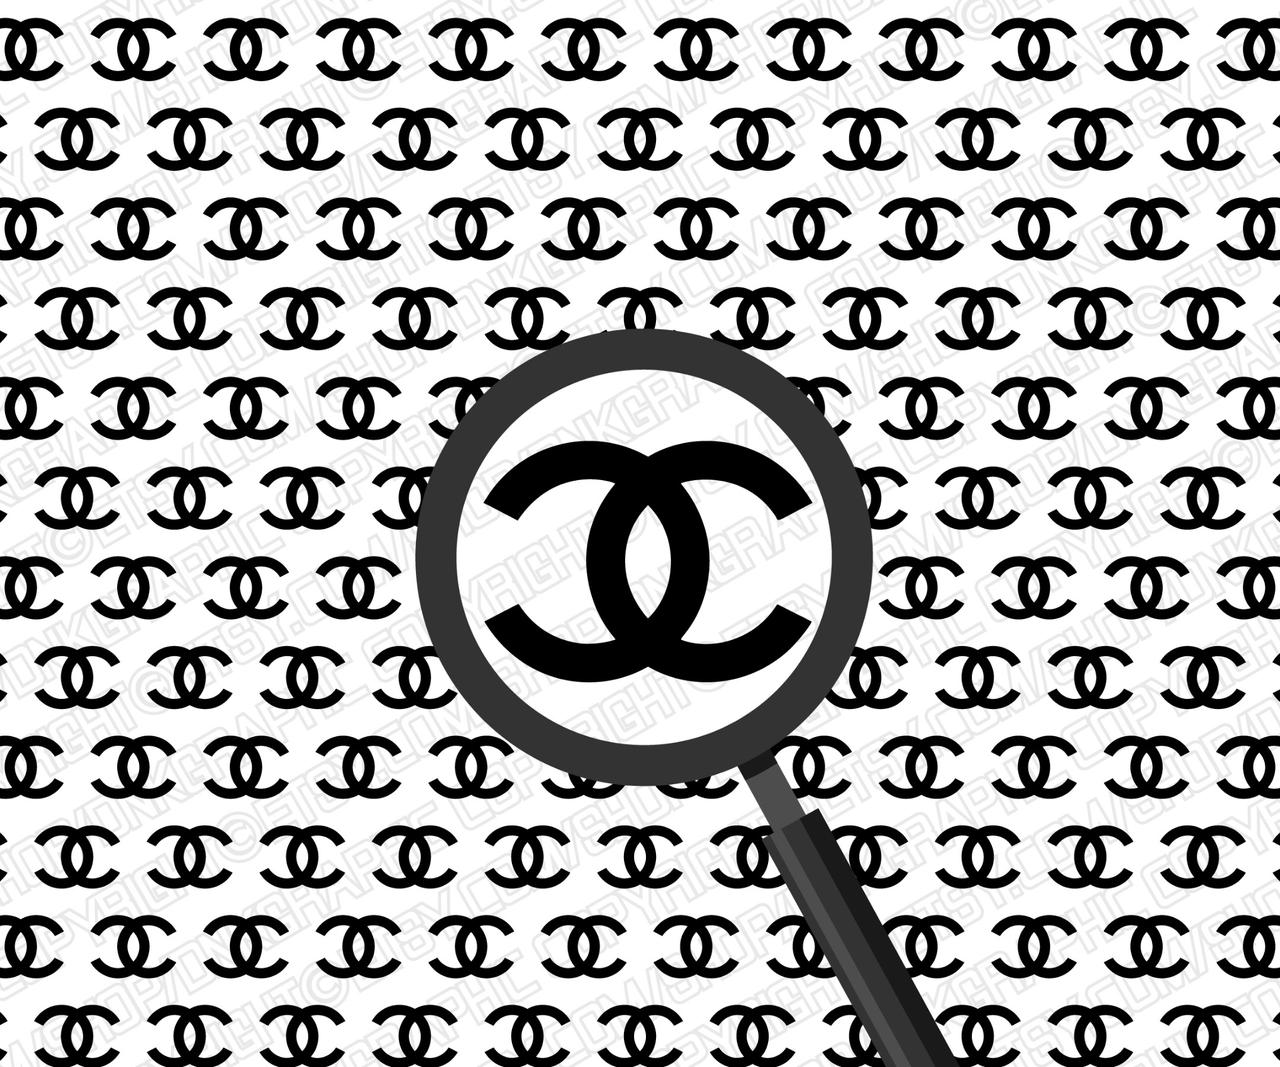 Chanel Heart Logo Svg - Download SVG Files for Cricut, Silhouette